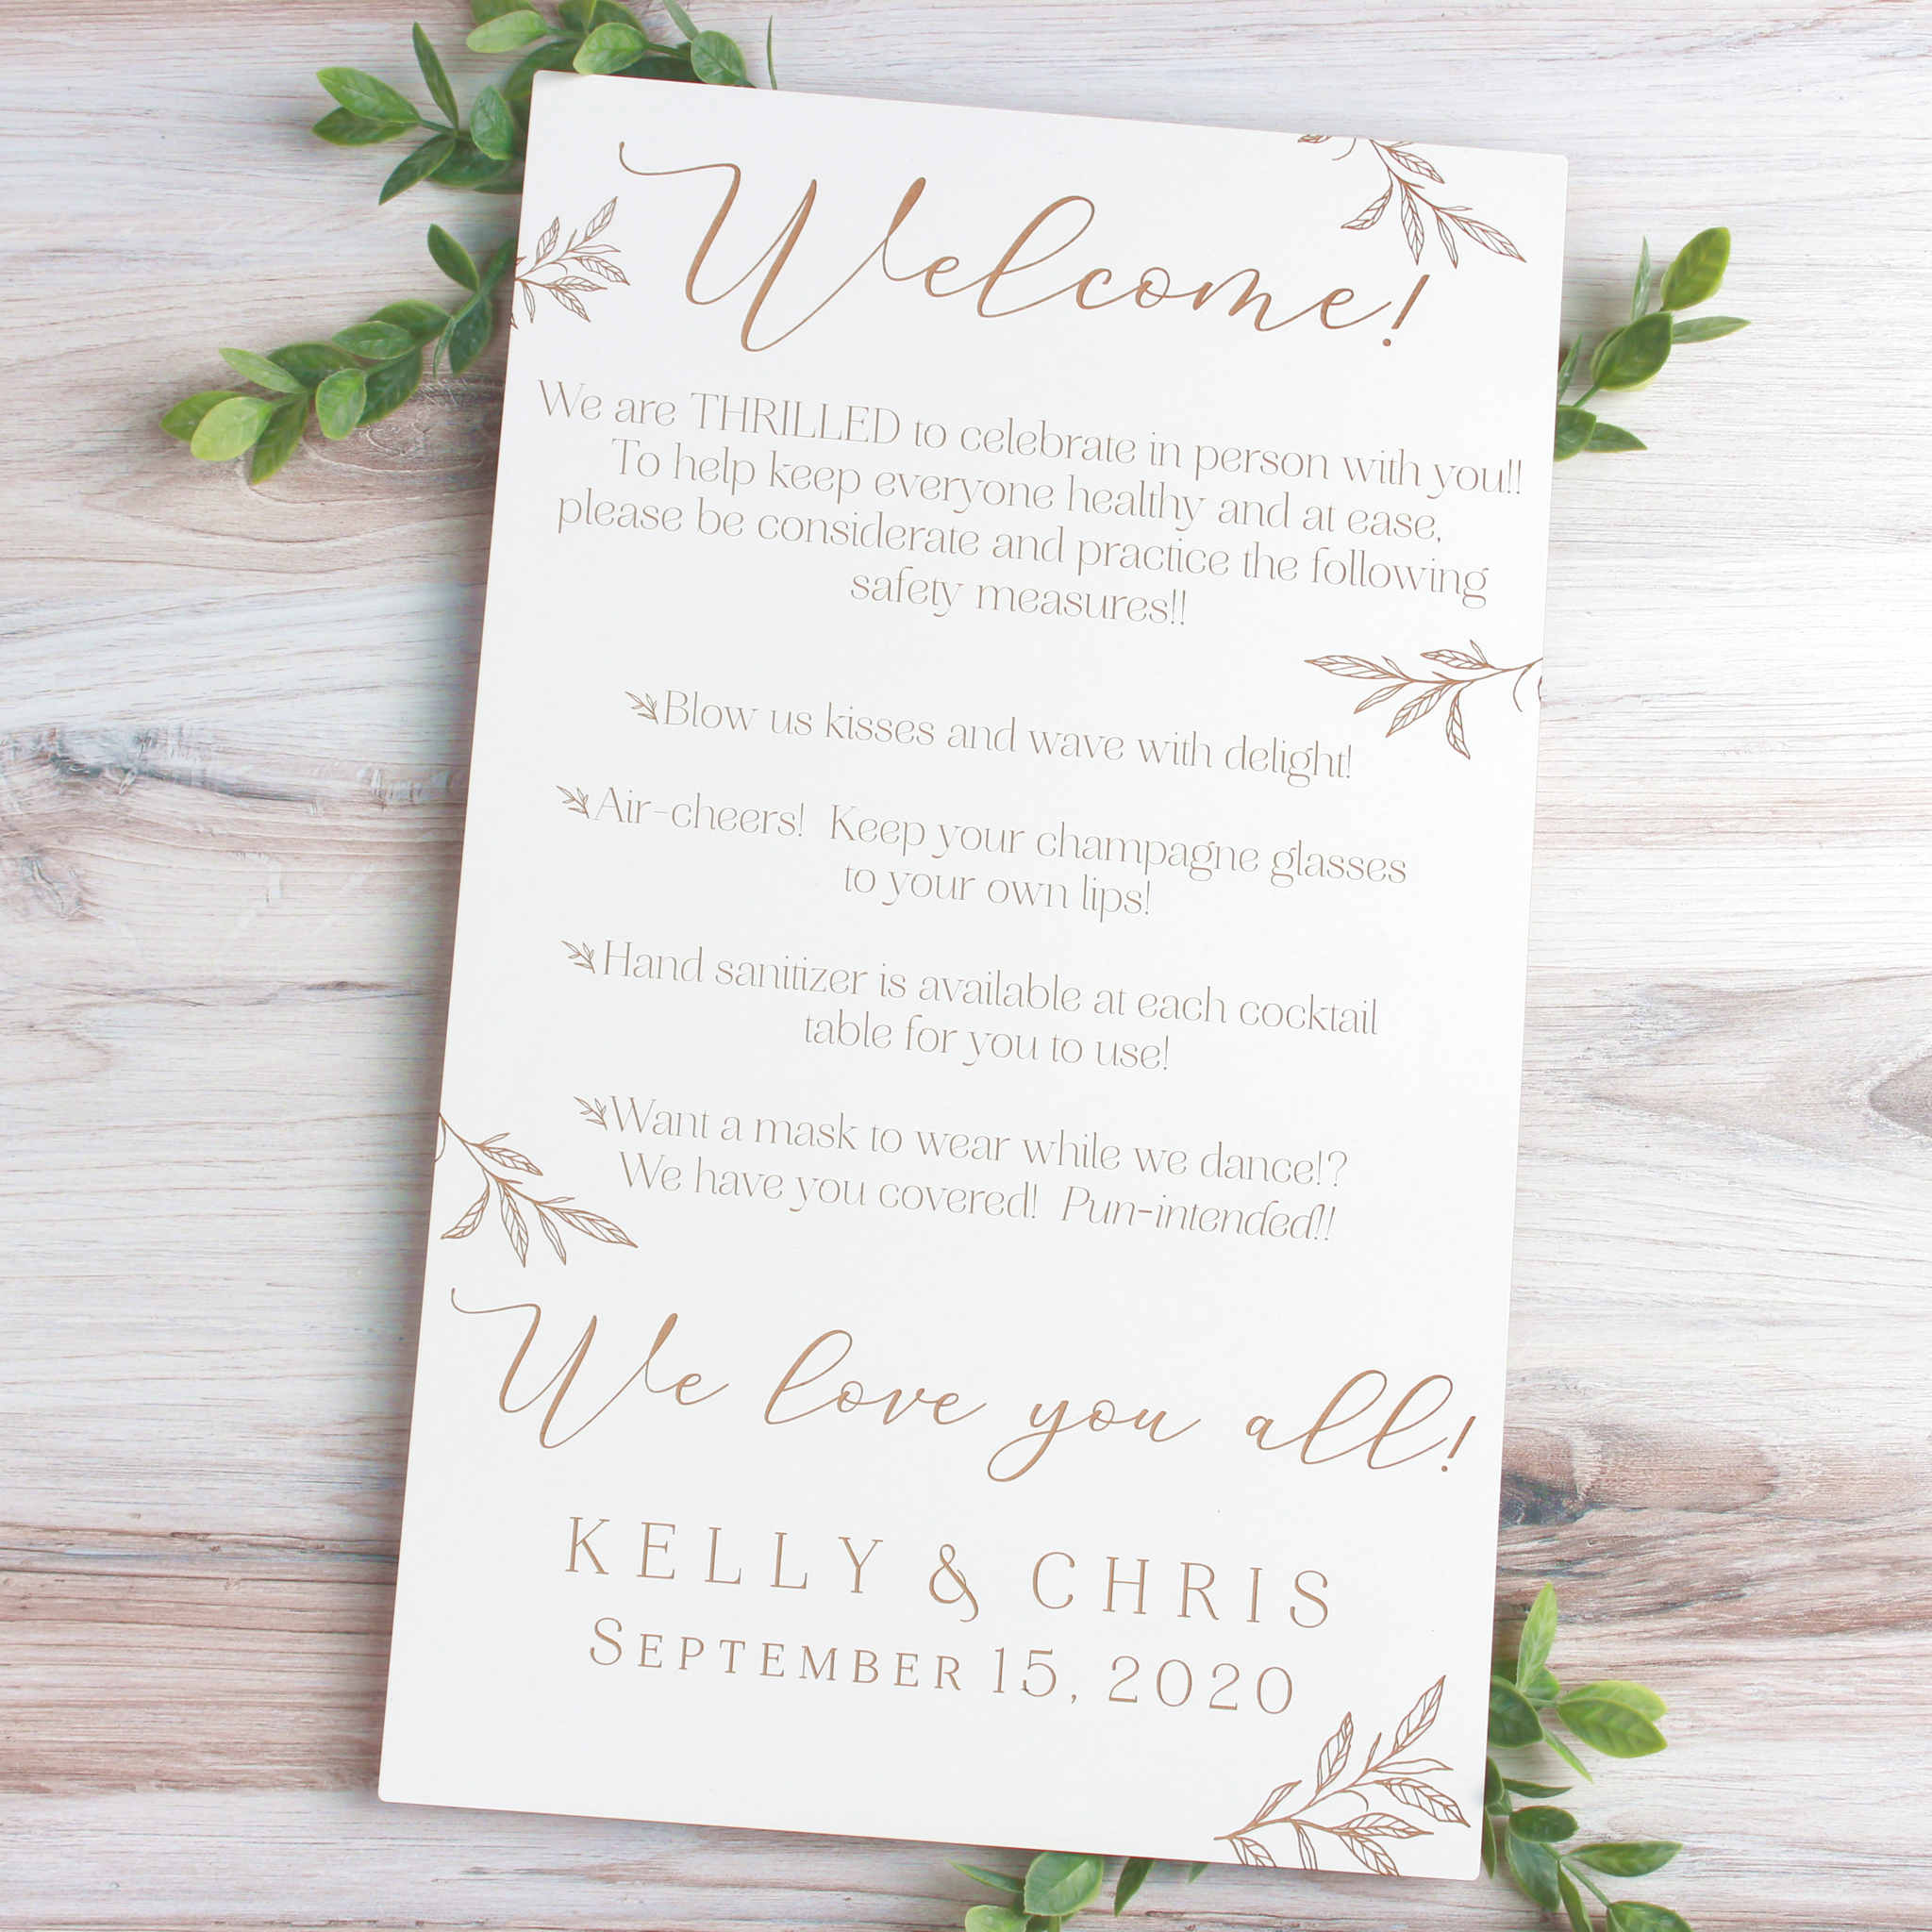 Details about   "BEST DAY EVER" Wedding LOT Cake Topper Glasses server set Guest Book Pick Color 